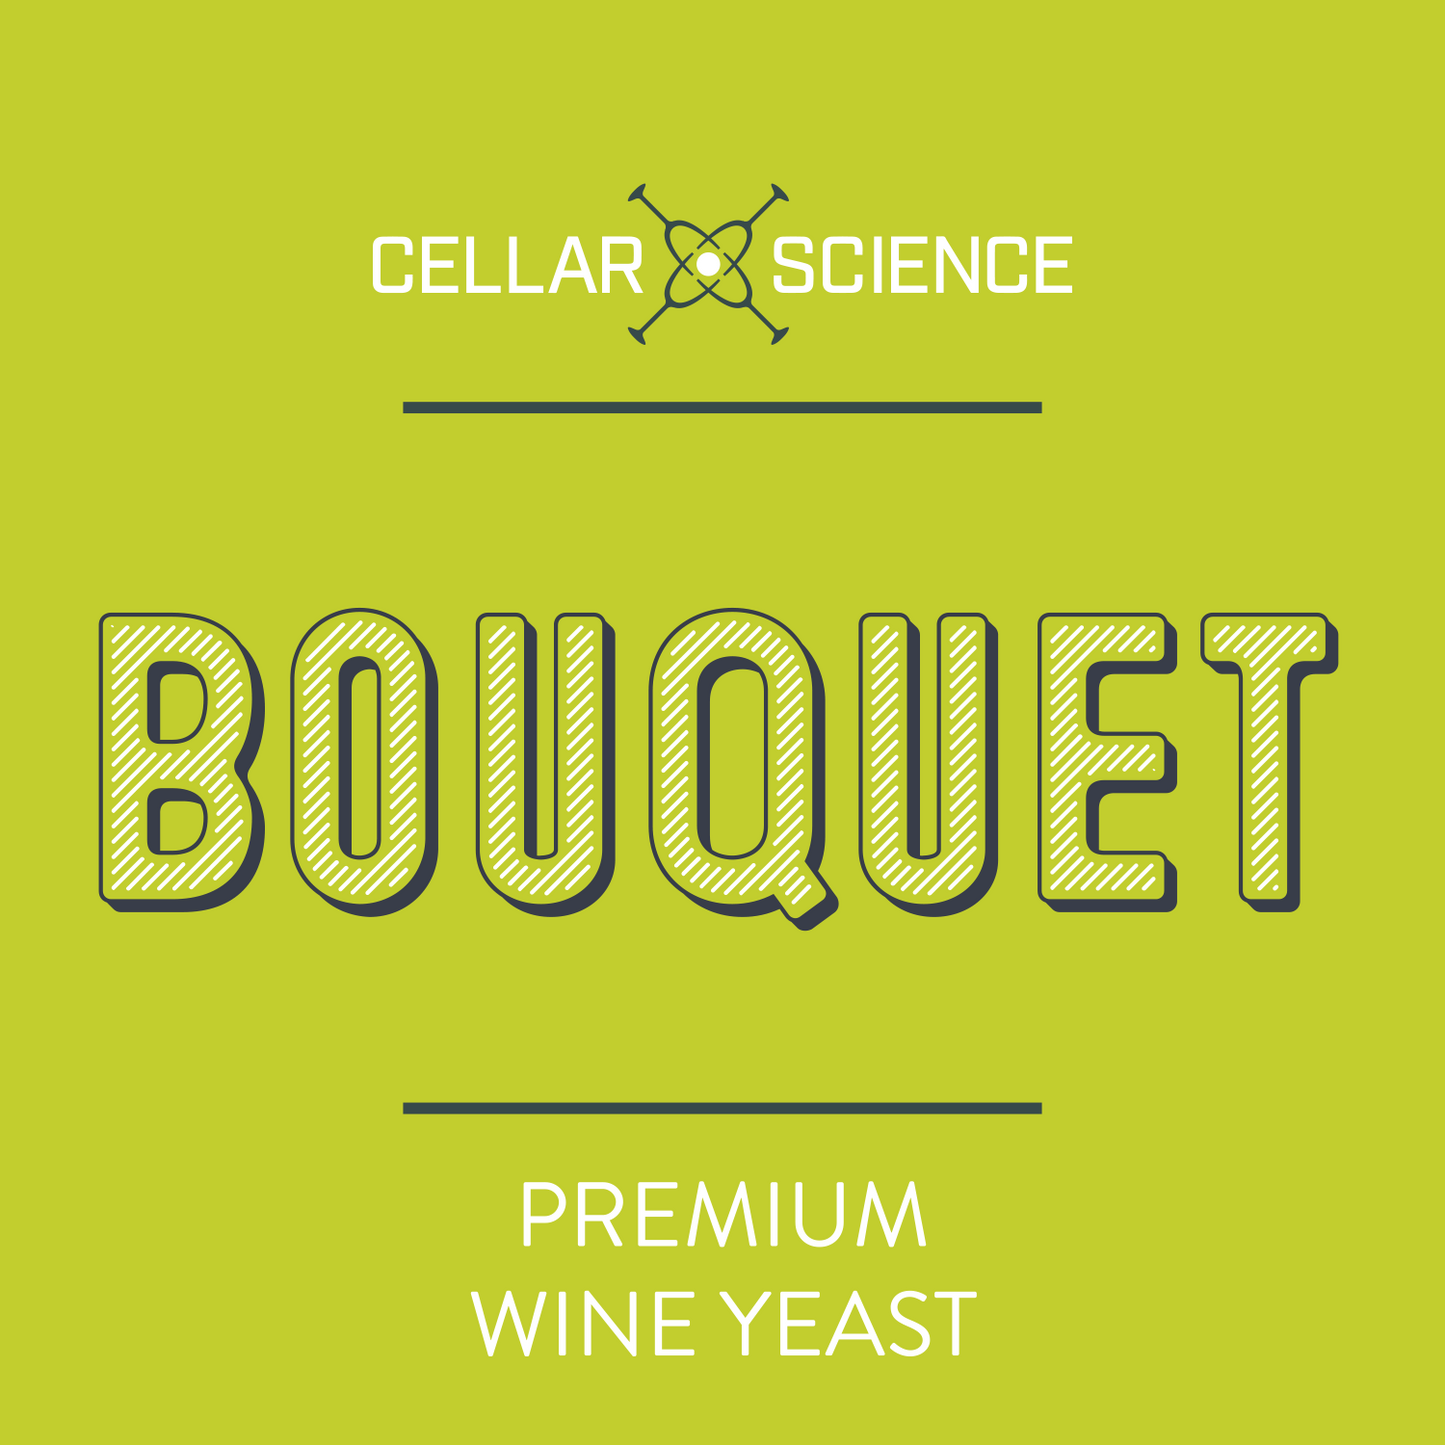 BOUQUET Dry Wine Yeast